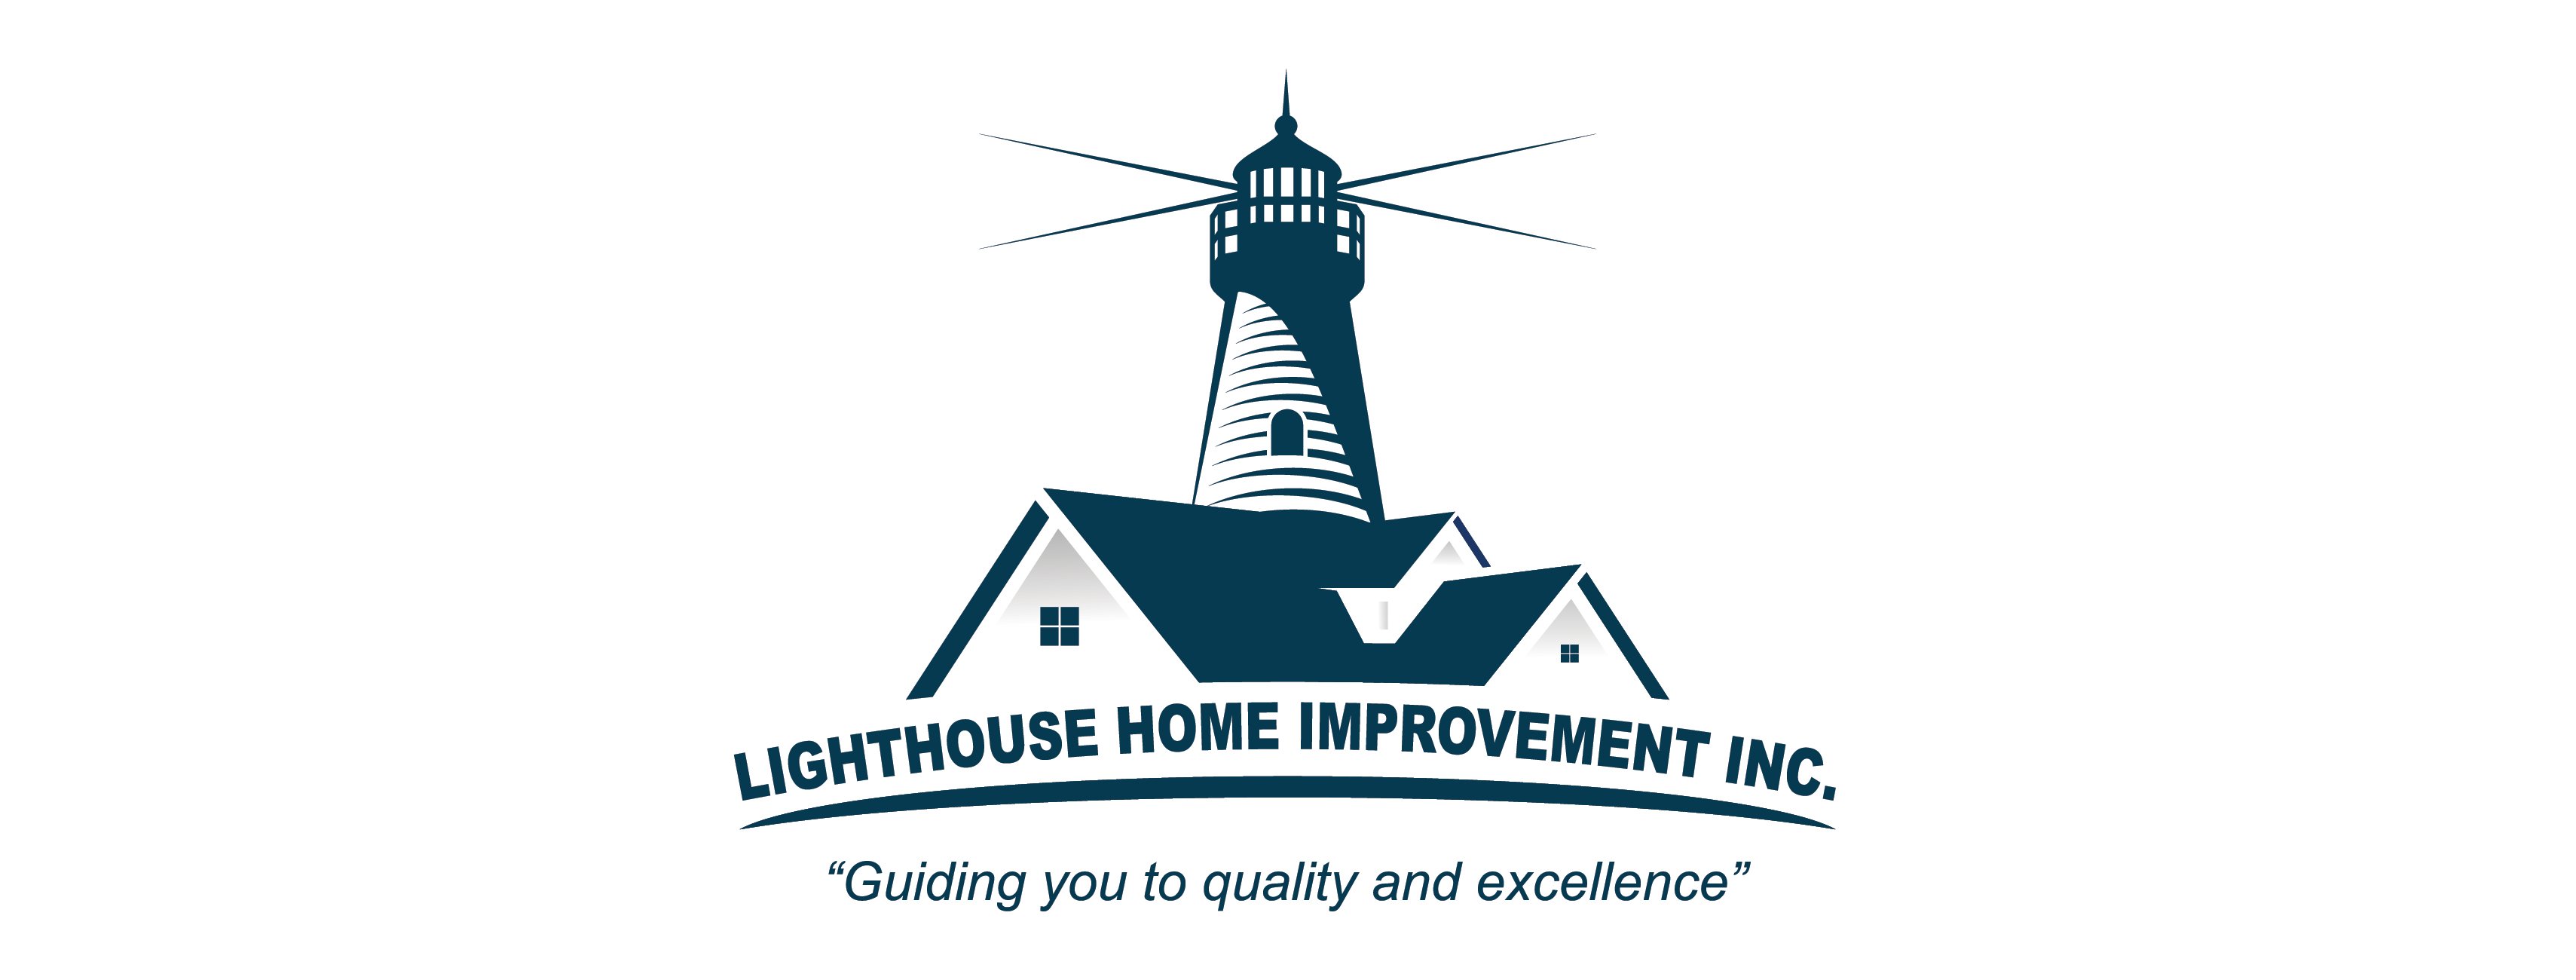 Lighthouse Home Improvement, Inc. Logo